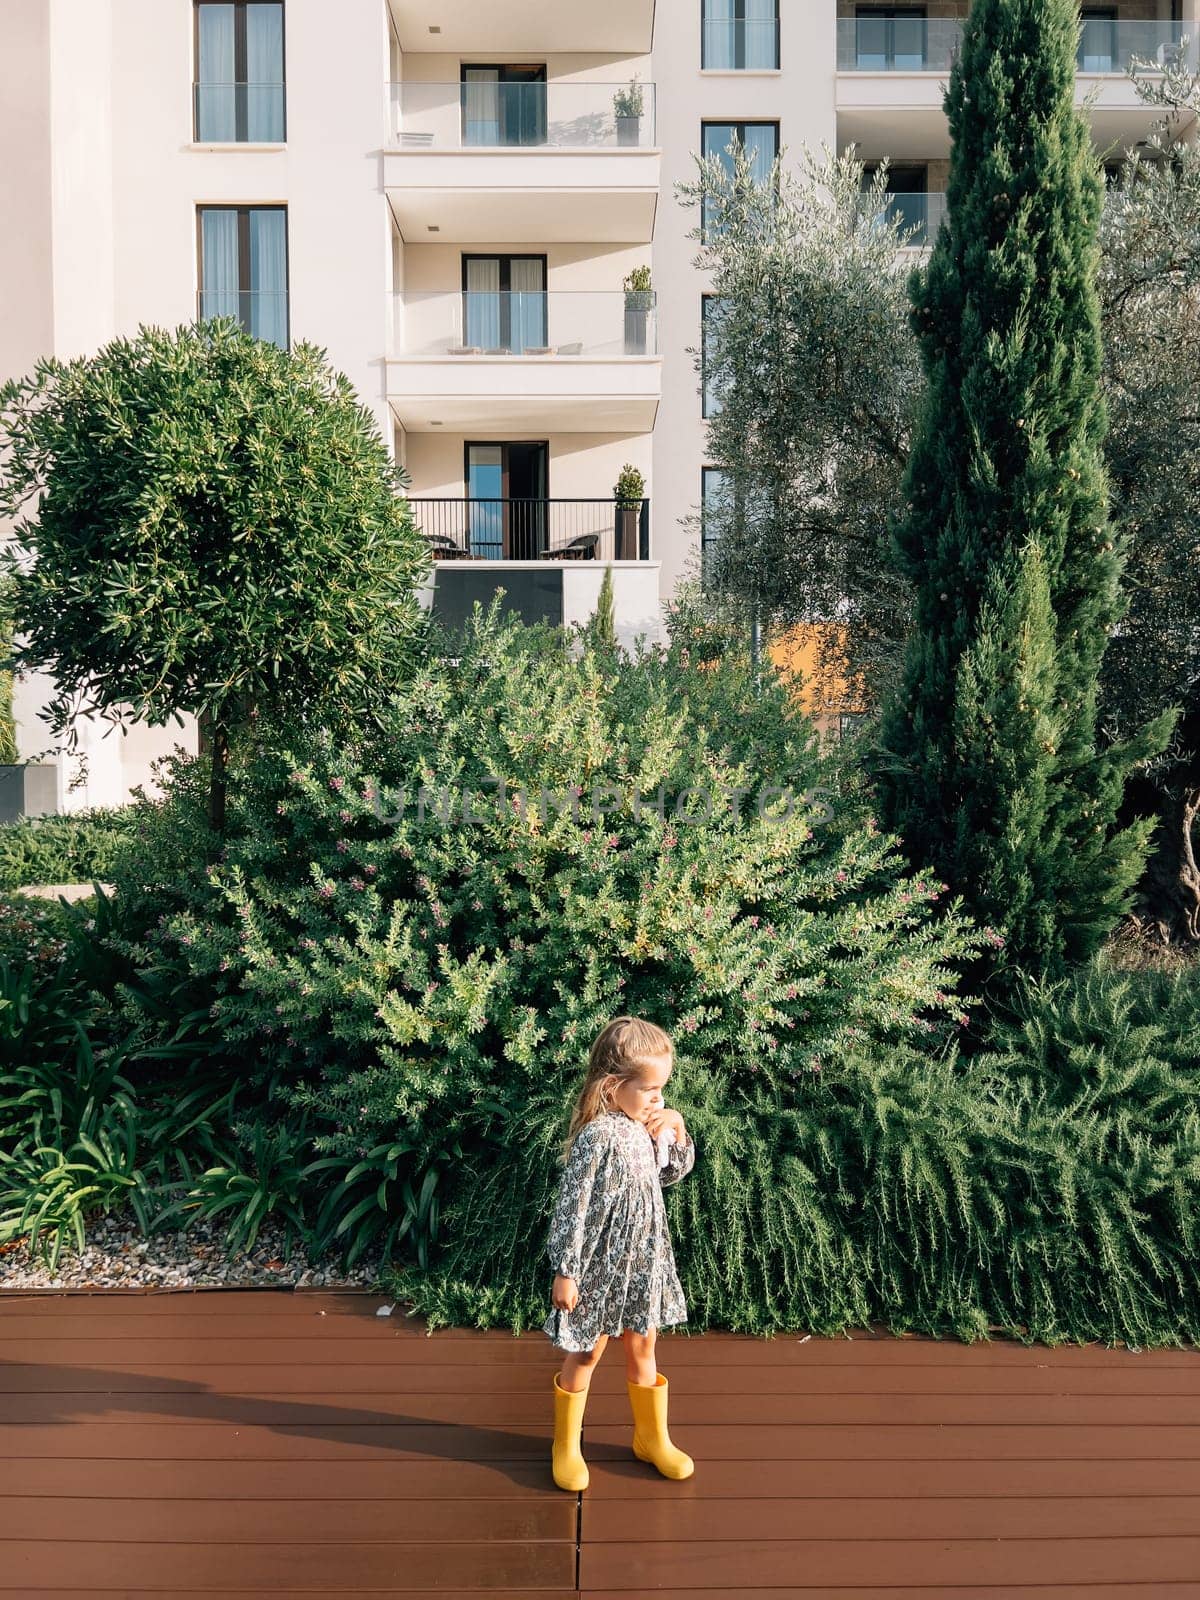 Little girl stands on a wooden deck near a flowering juniper bush in the garden by Nadtochiy